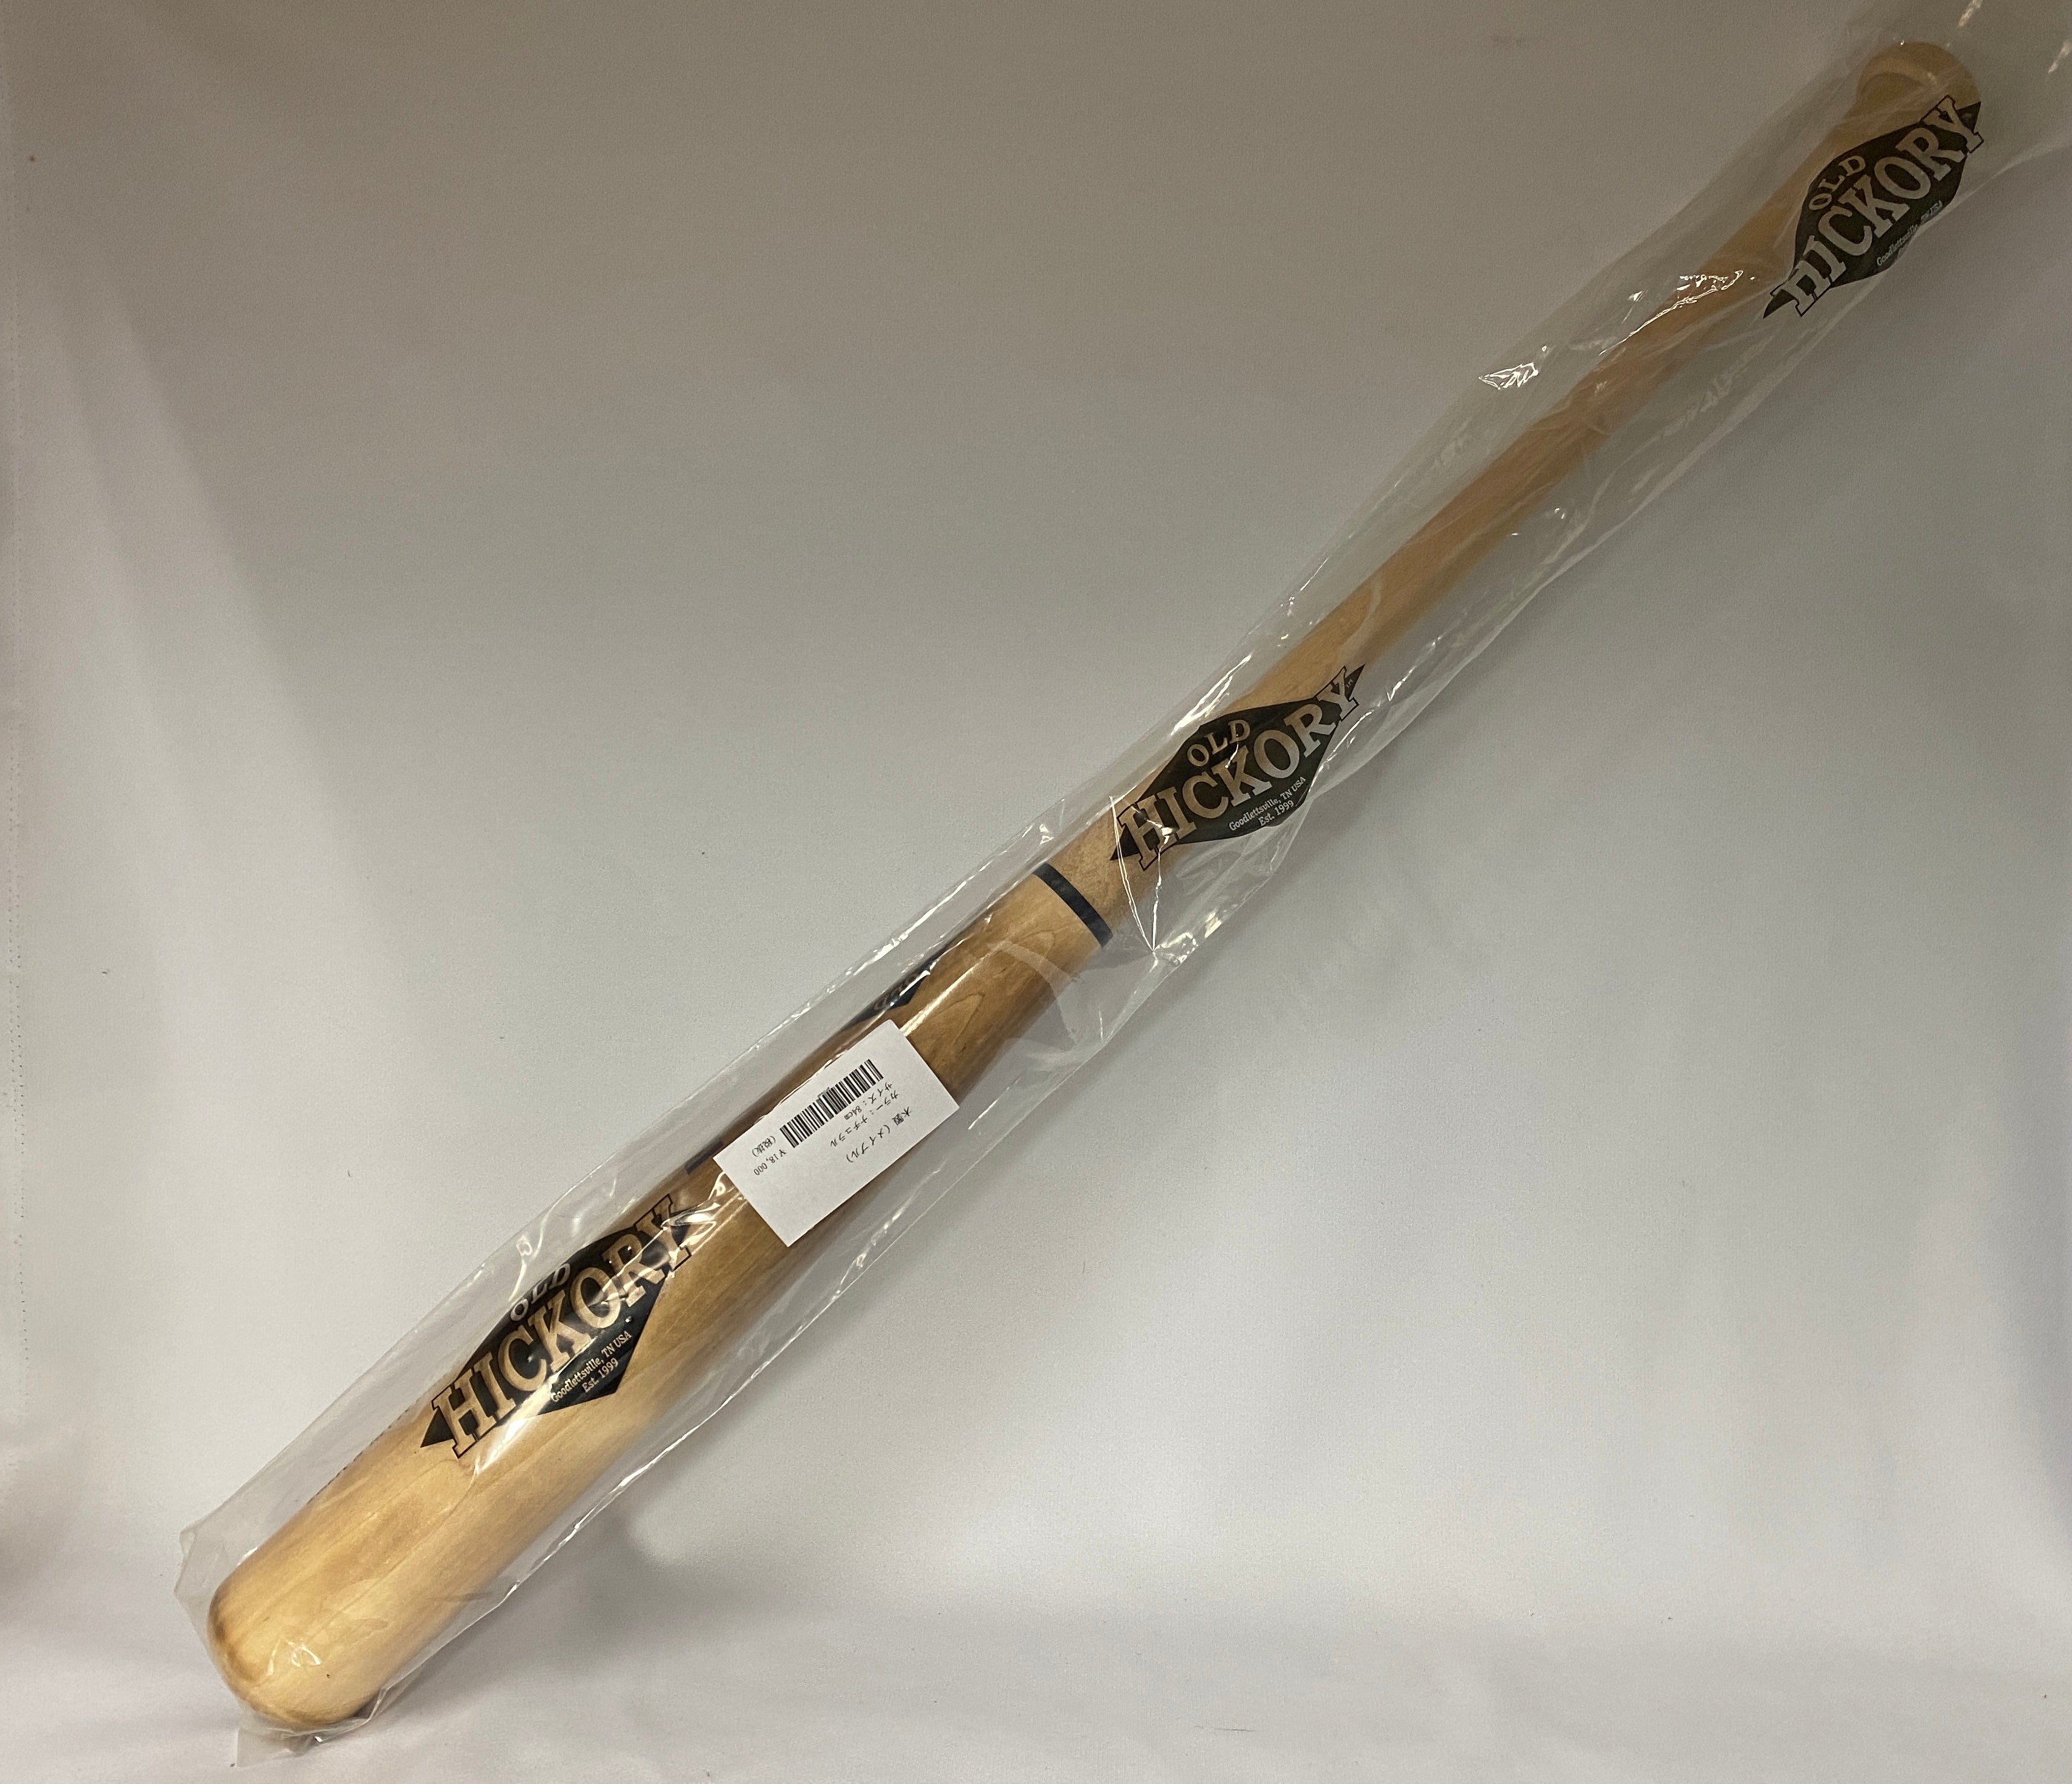 【MLB マイナーリーグ支給品】SDパドレス オールドヒッコリー 硬式木製バット